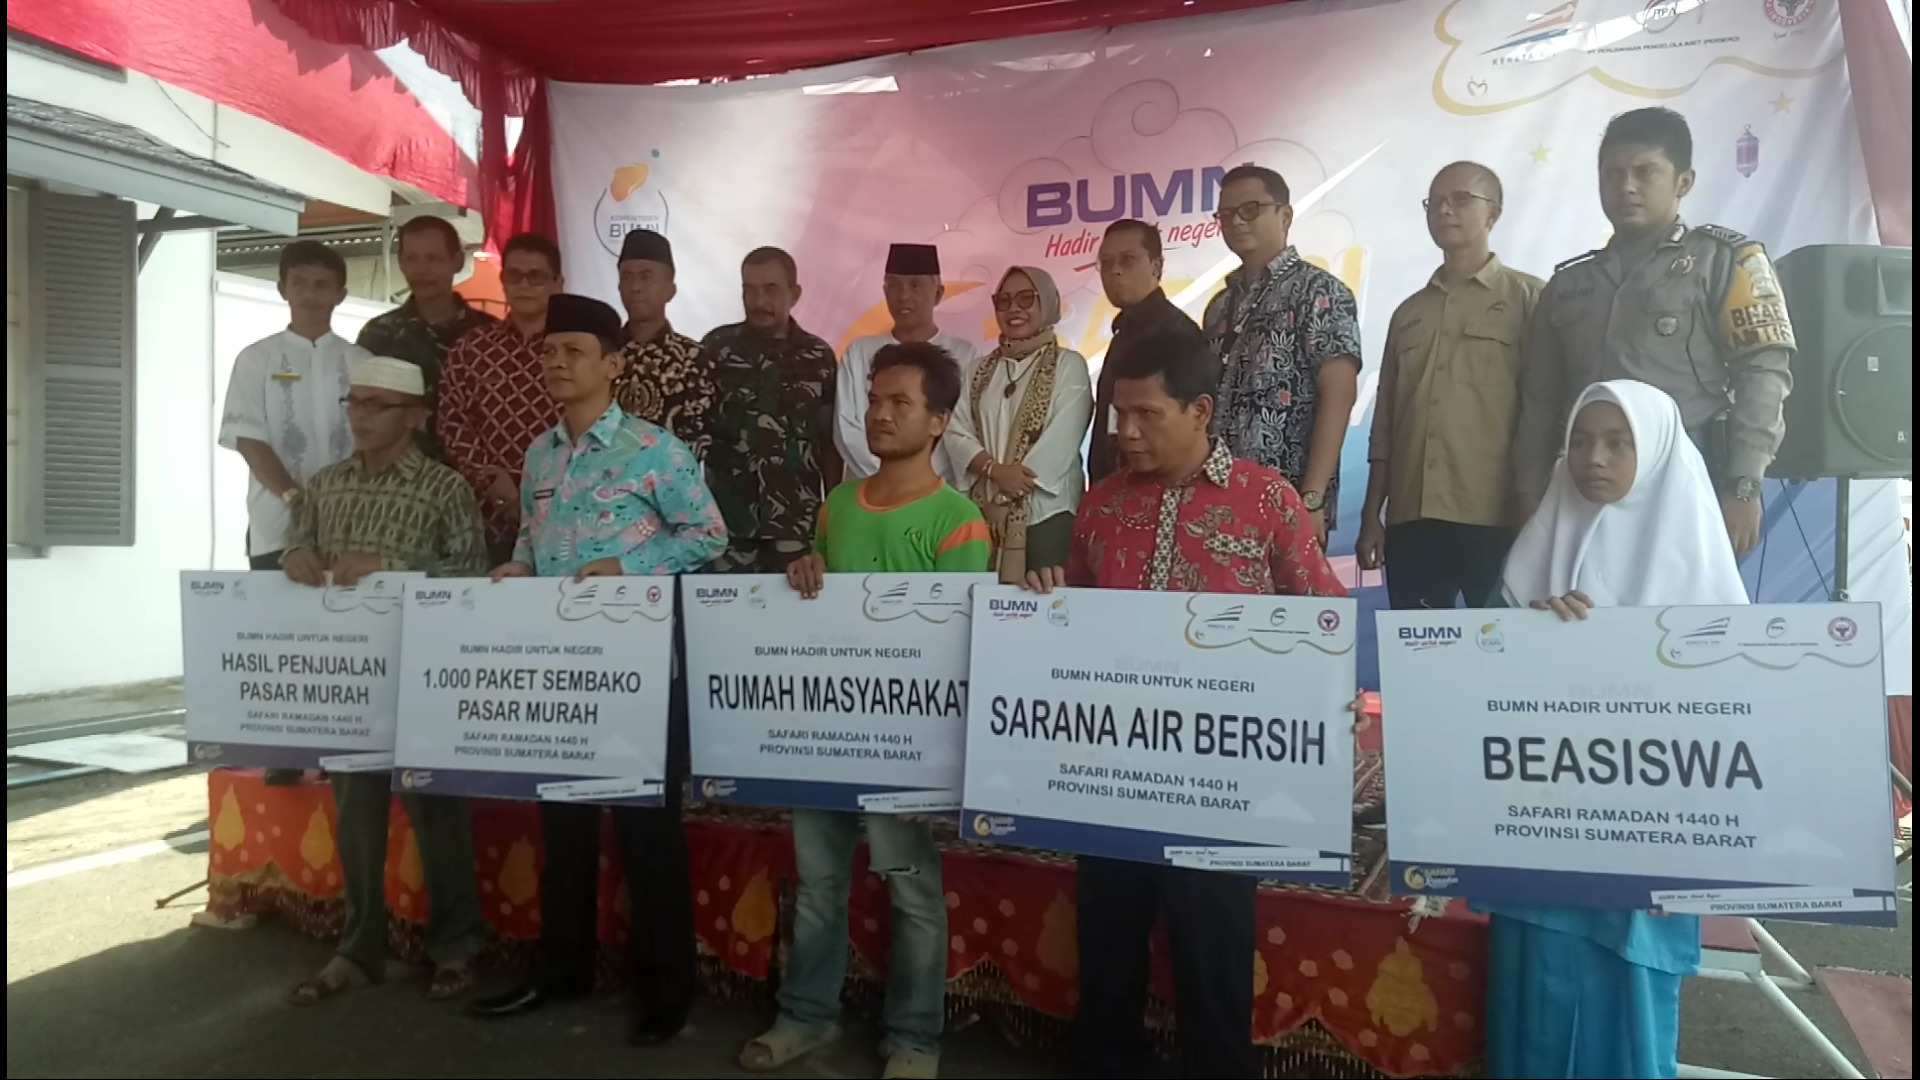 BUMN Untuk Negeri Tercatat Dalam Museum Rekor Indonesia